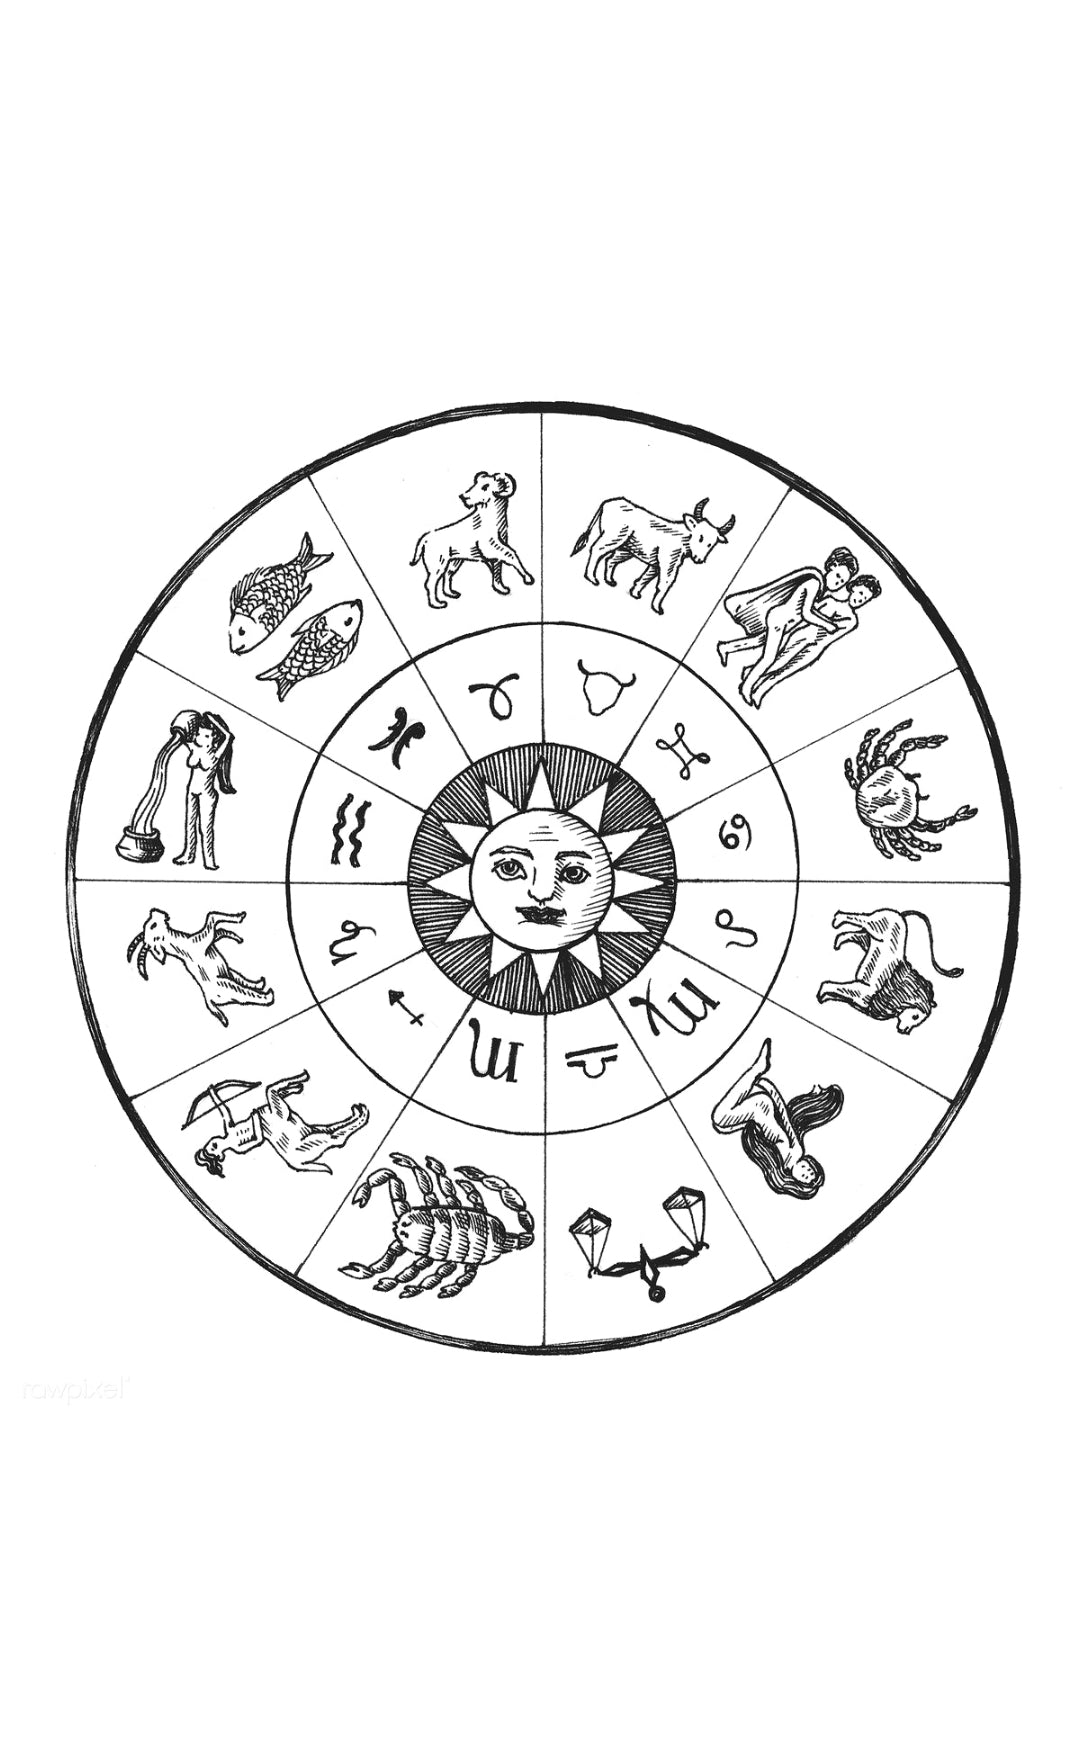 zodiac map